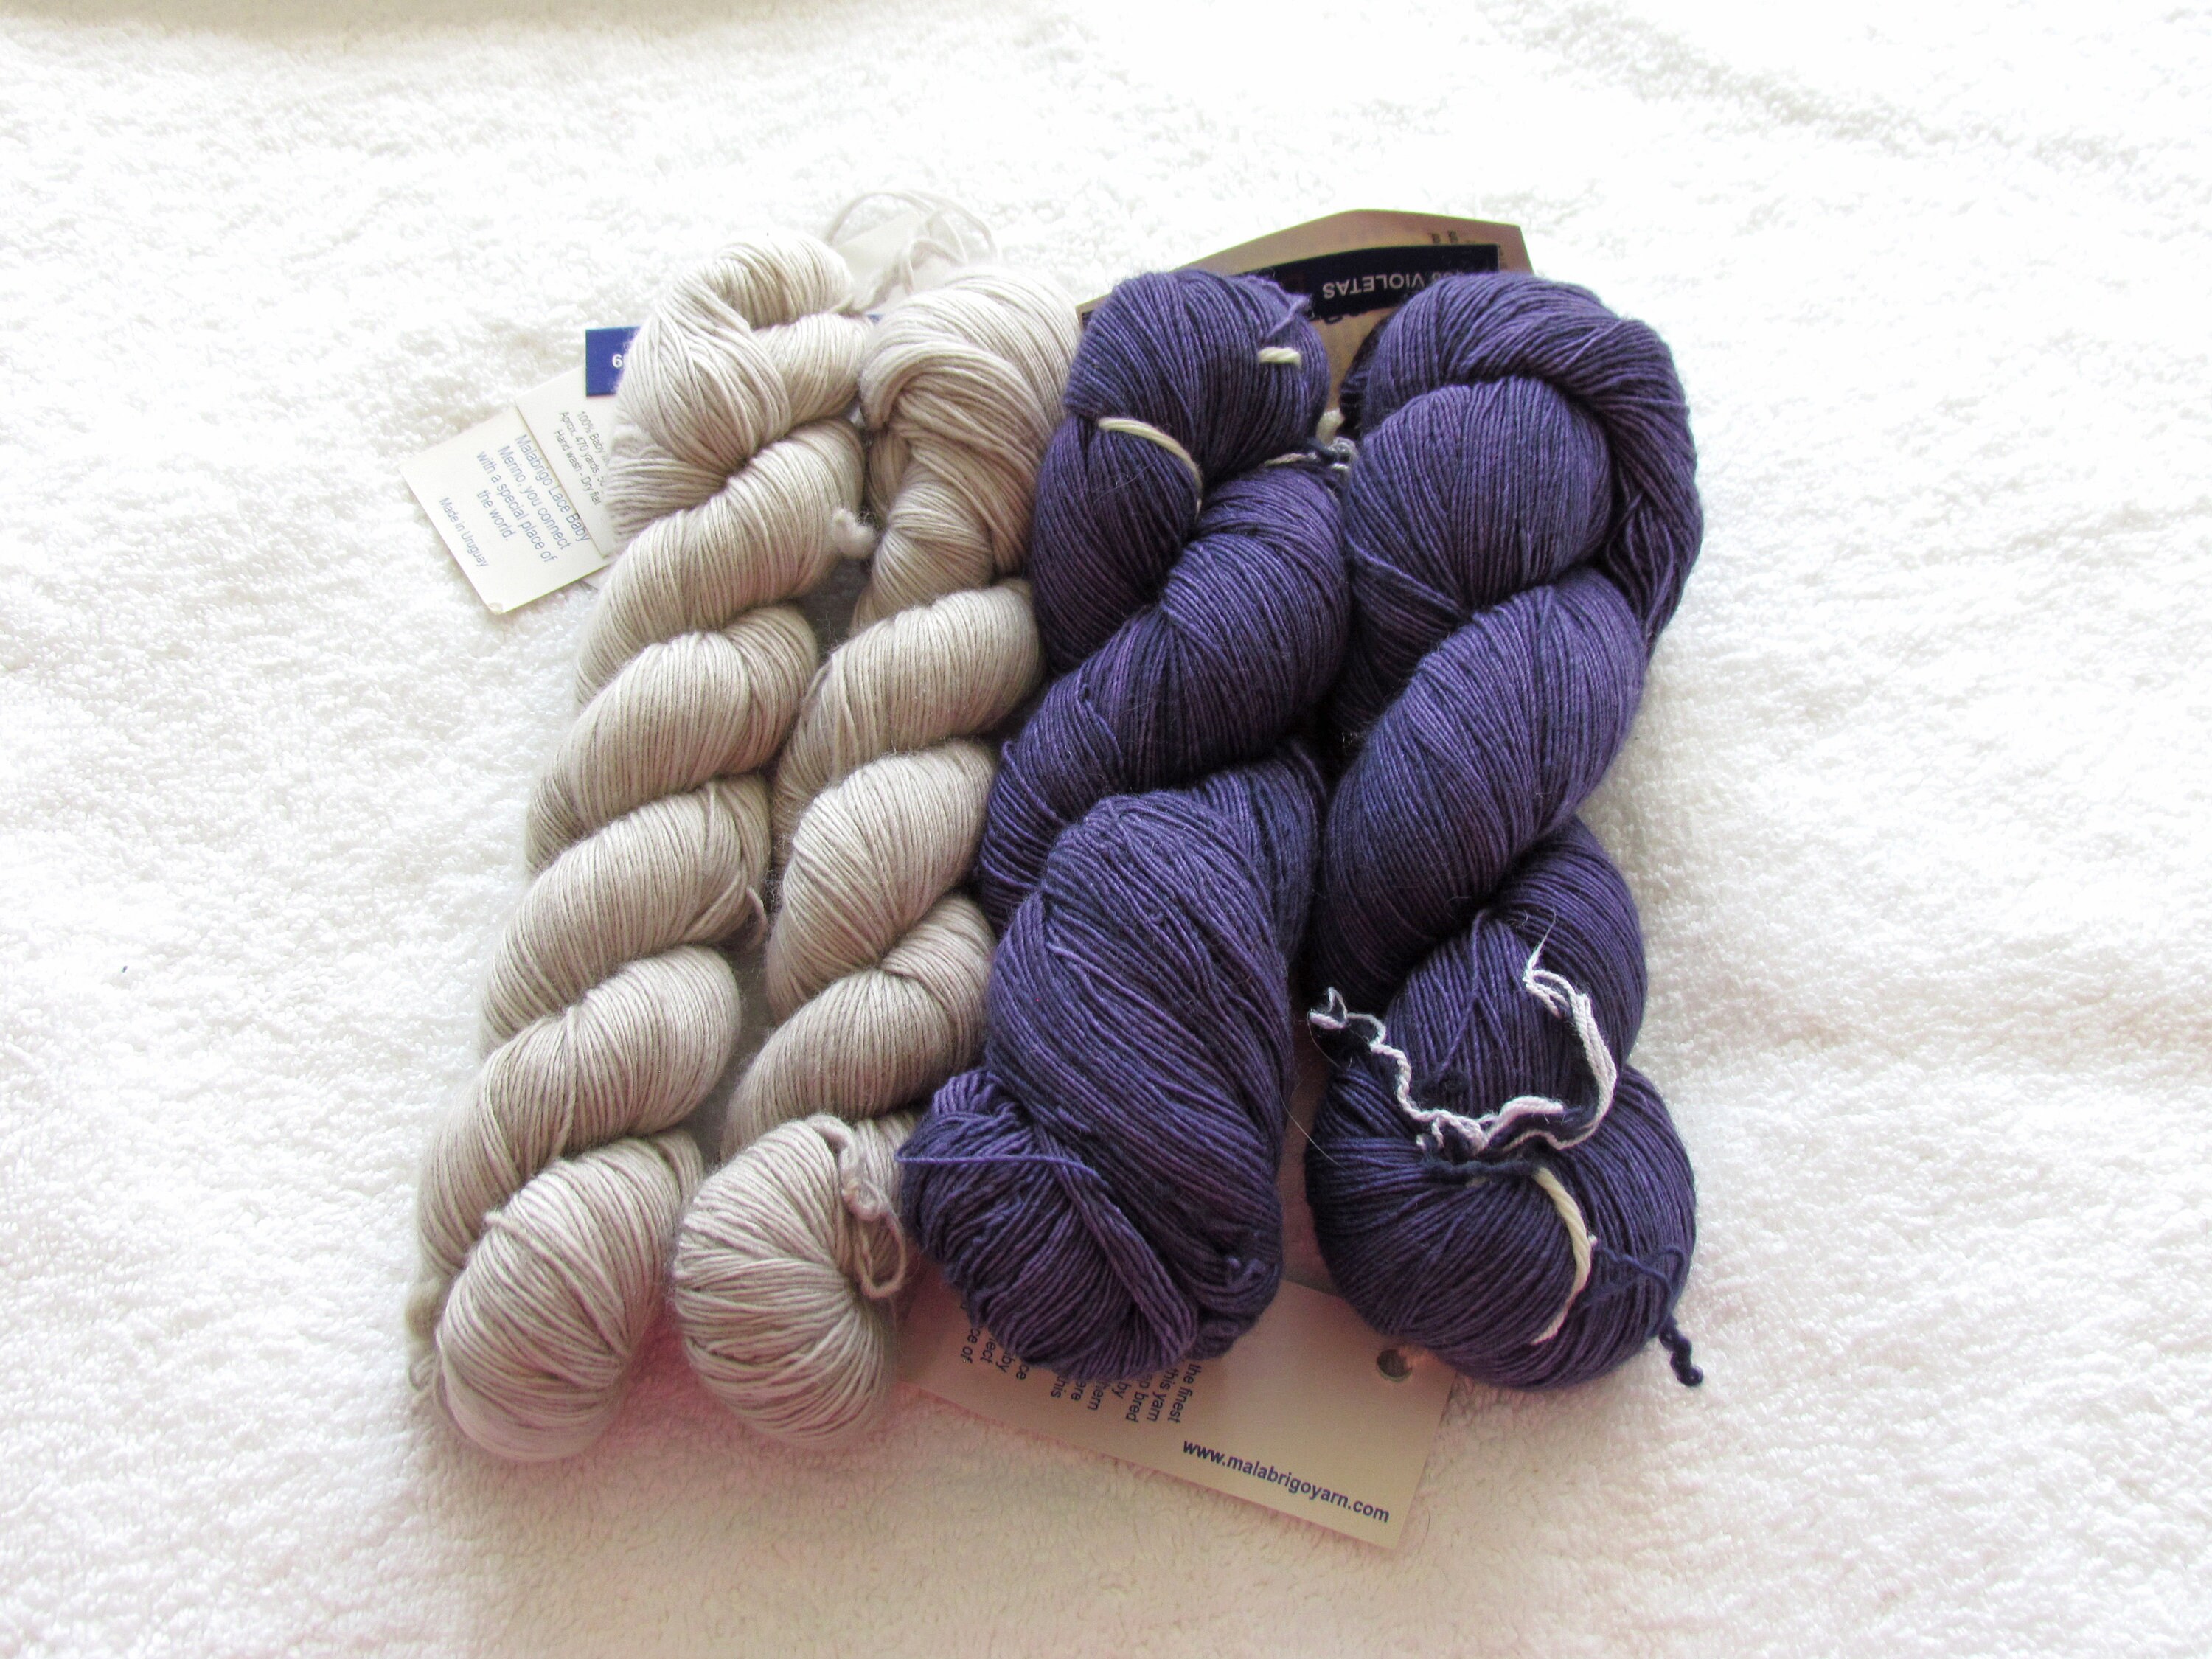 Violet Yarnart Mercerized Cotton Yarn for Knitting Crochet Yarn